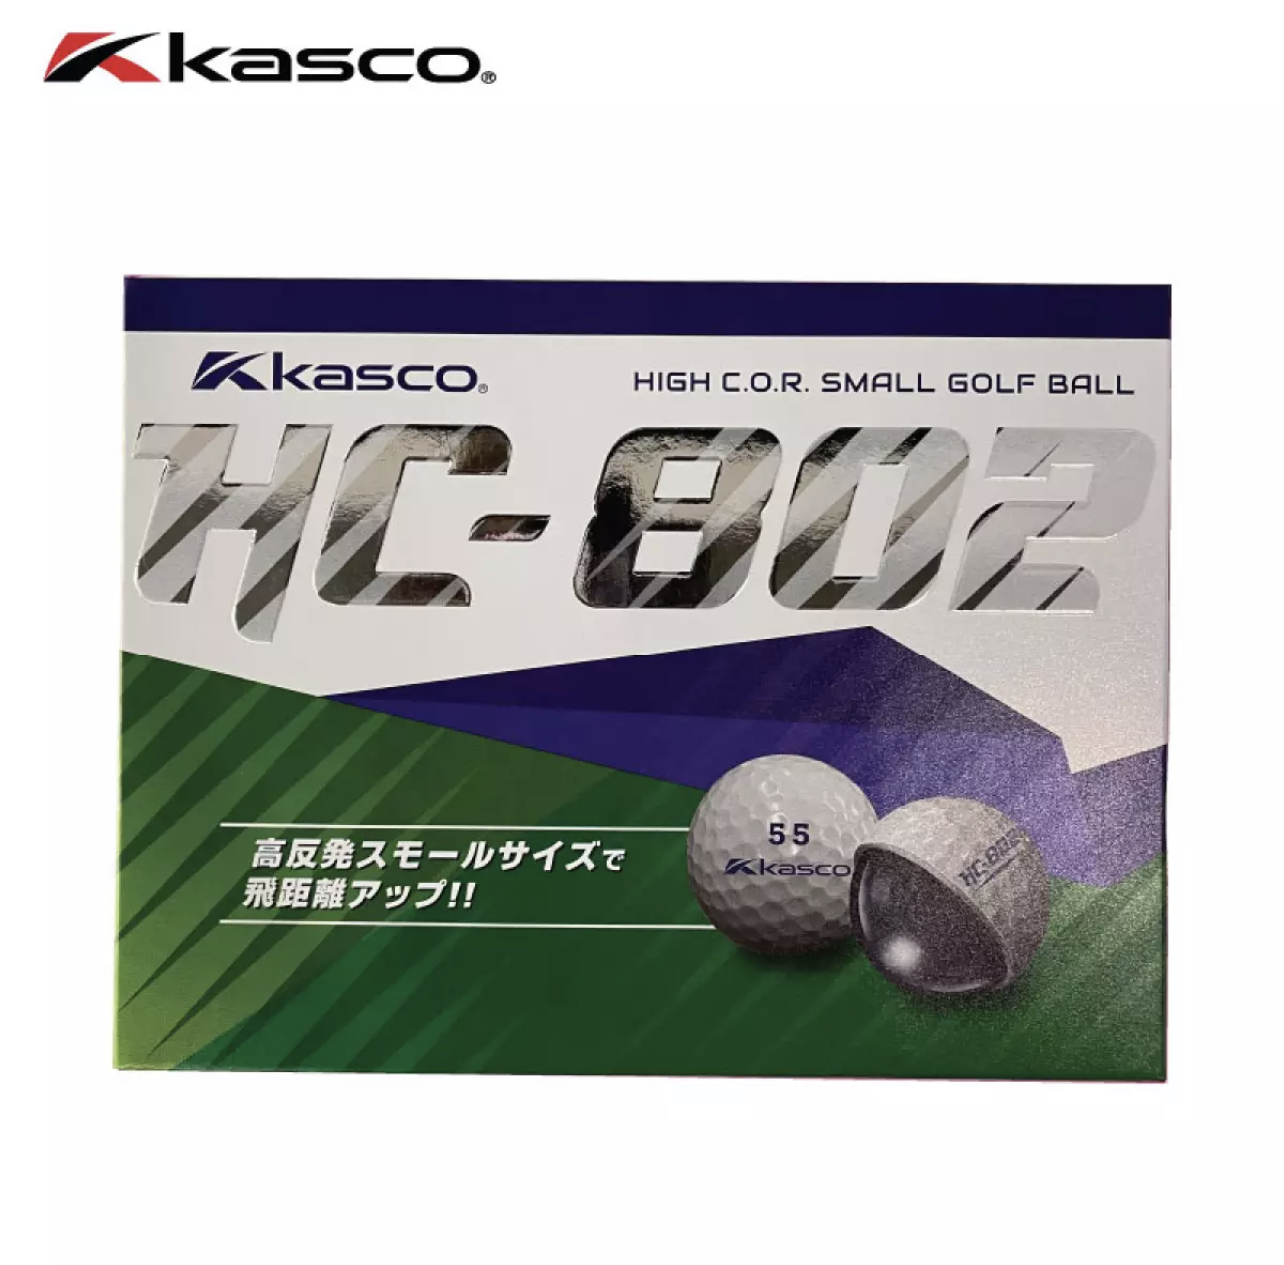 KASCO NEW HC-802 High cor Small Golf Ball ลูกกอล์ฟ